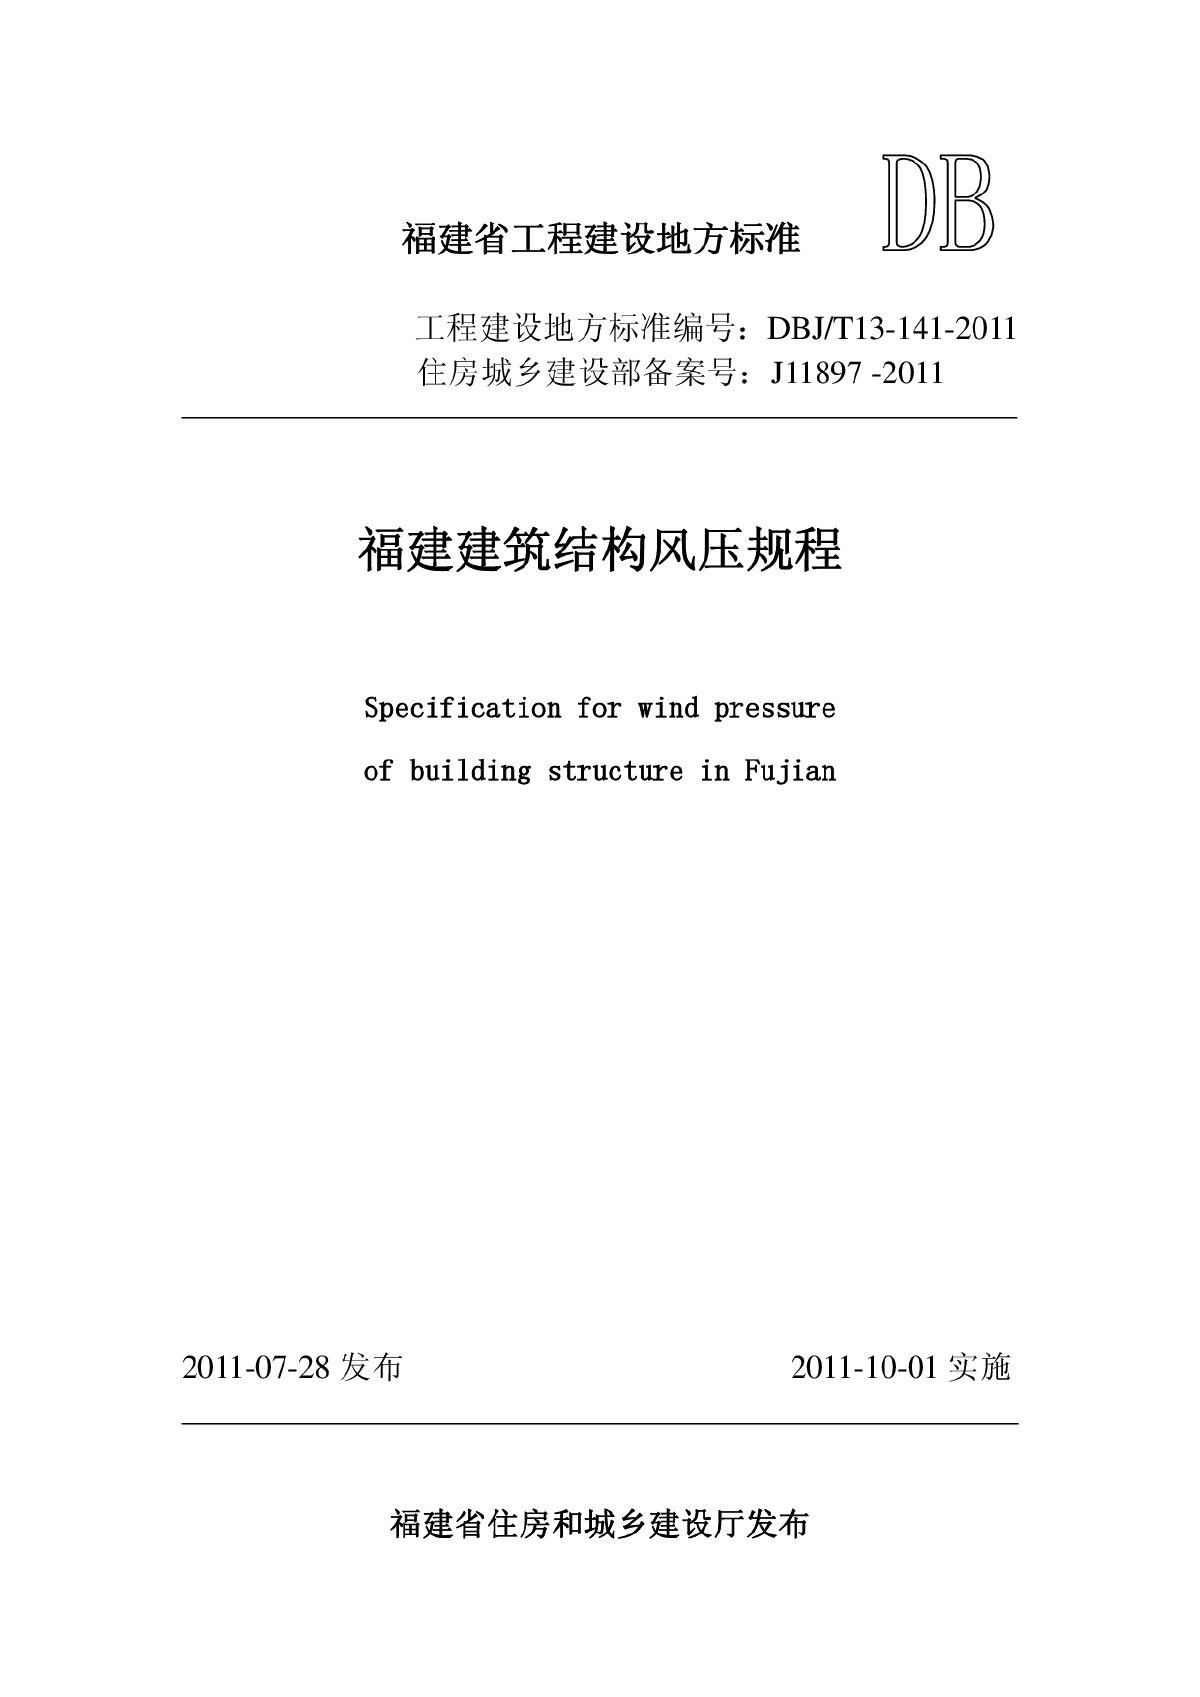 DBJT13-141-2011 福建省建筑结构风压规程-图一